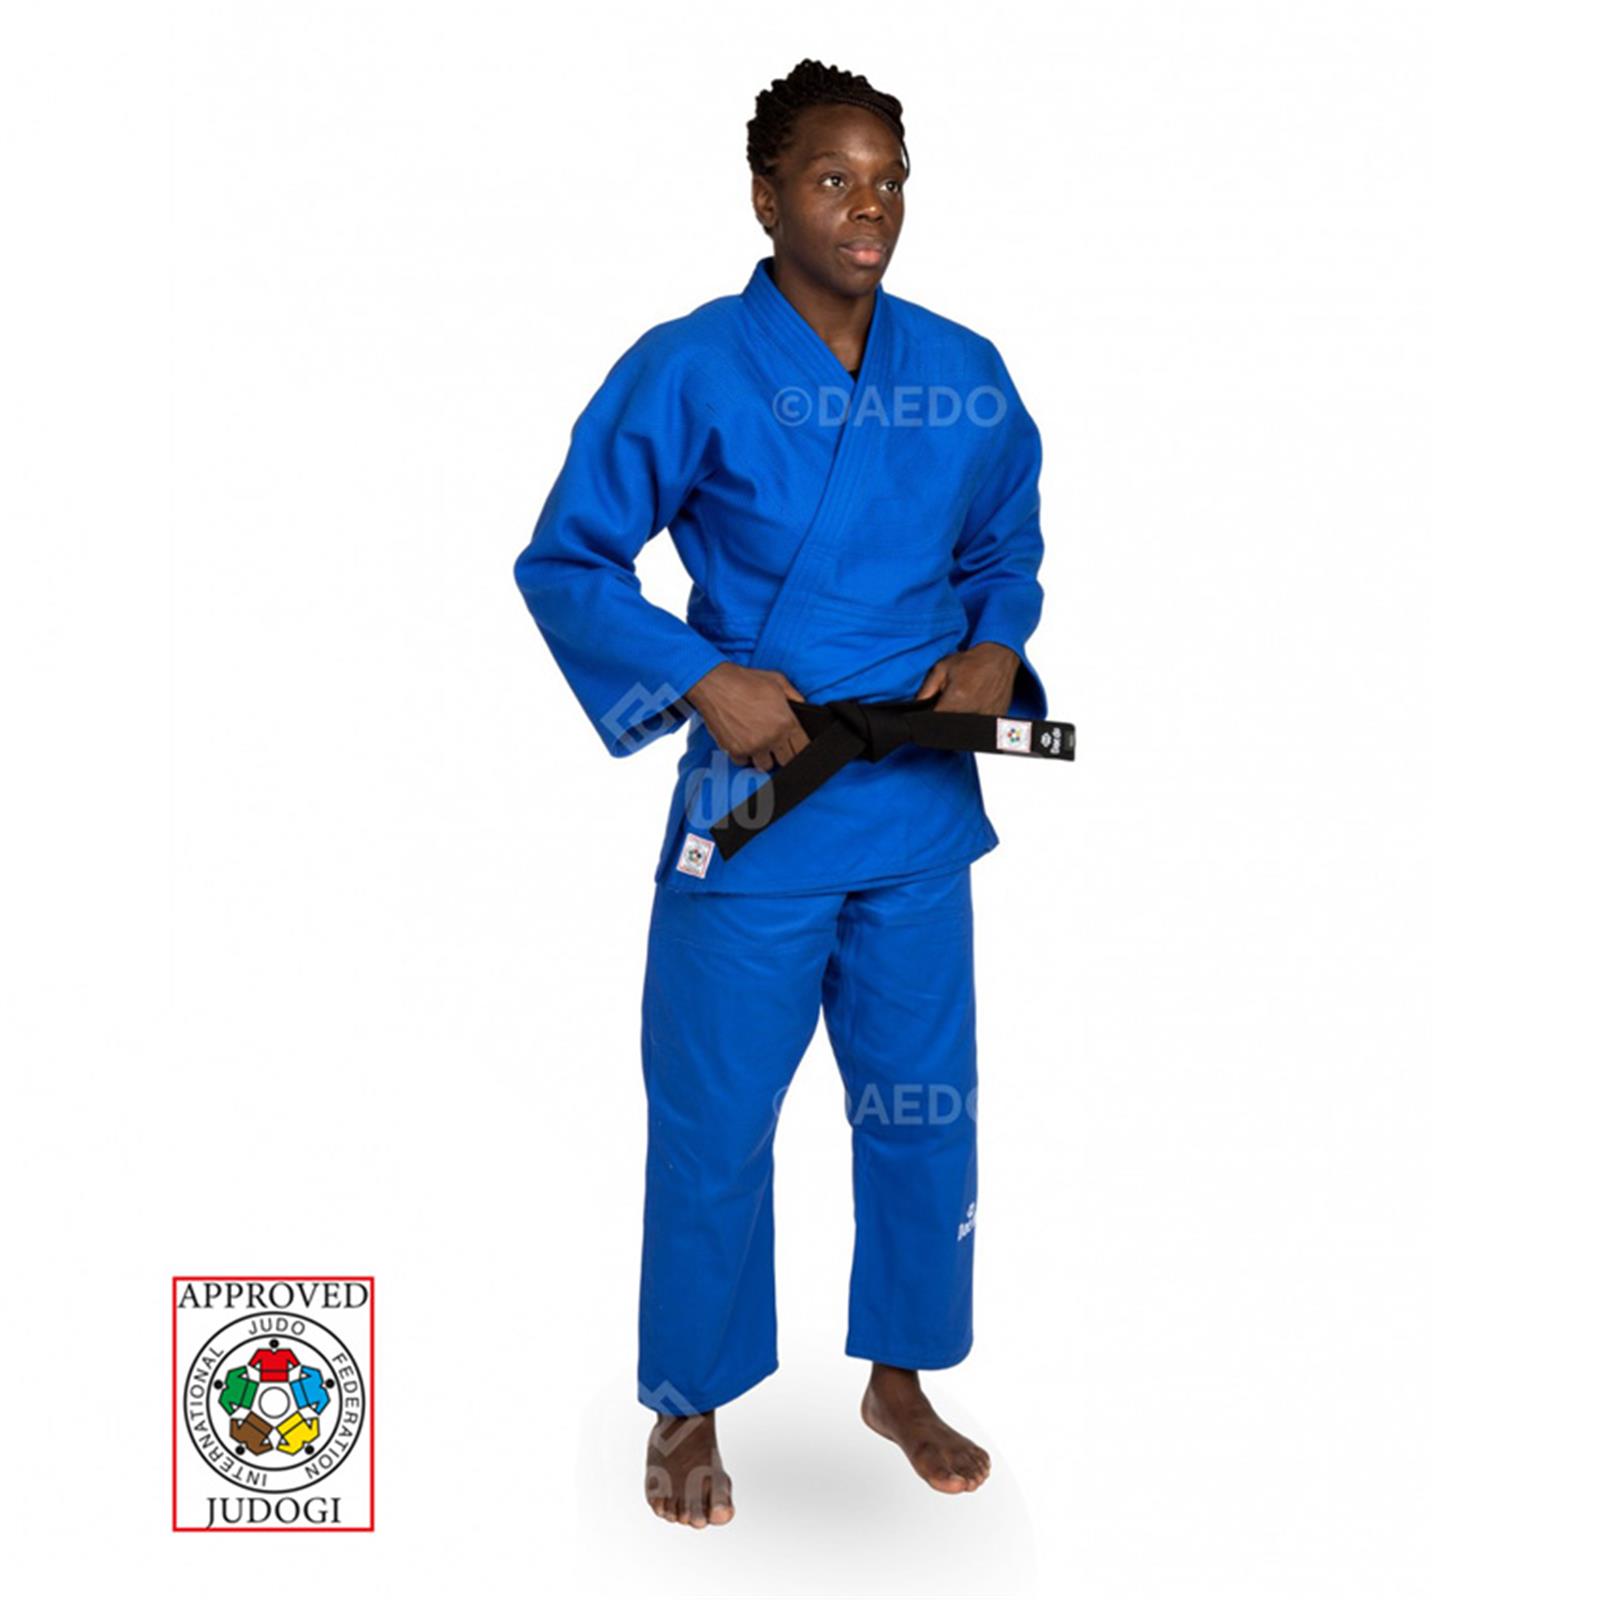 Dae Do Judogi da Competizione Blu Omologato IJF (7° - 200cm - BLU)